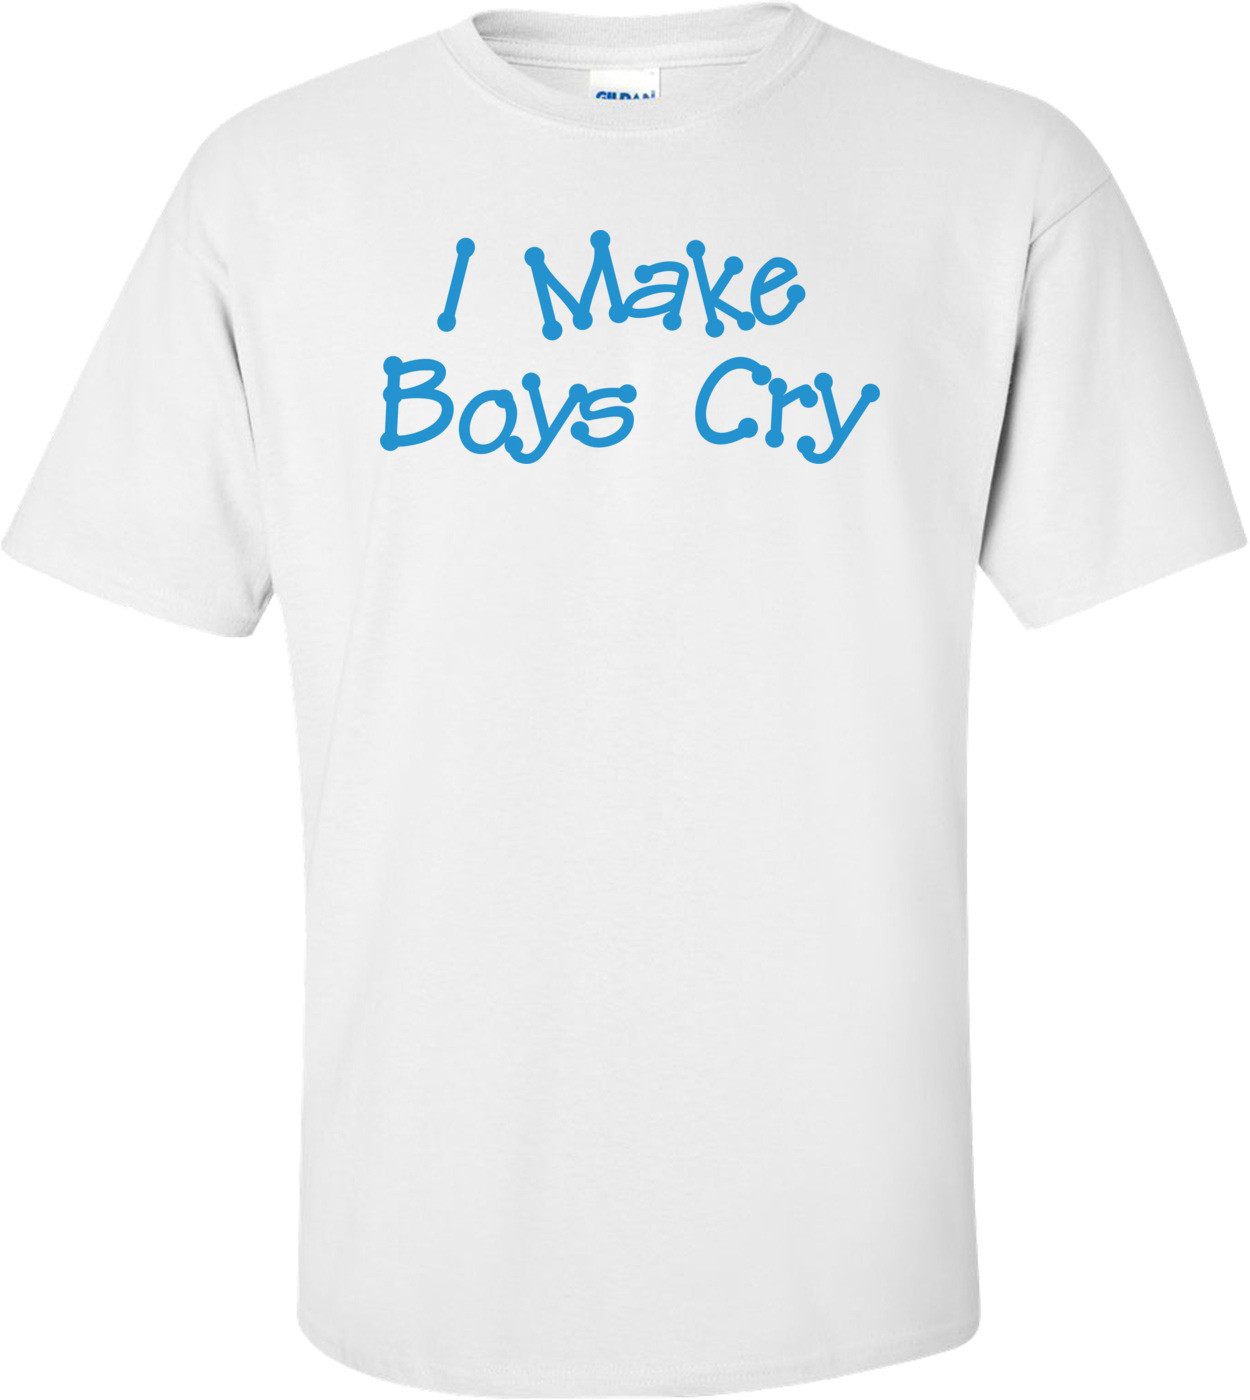 I Make Boys Cry T-shirt